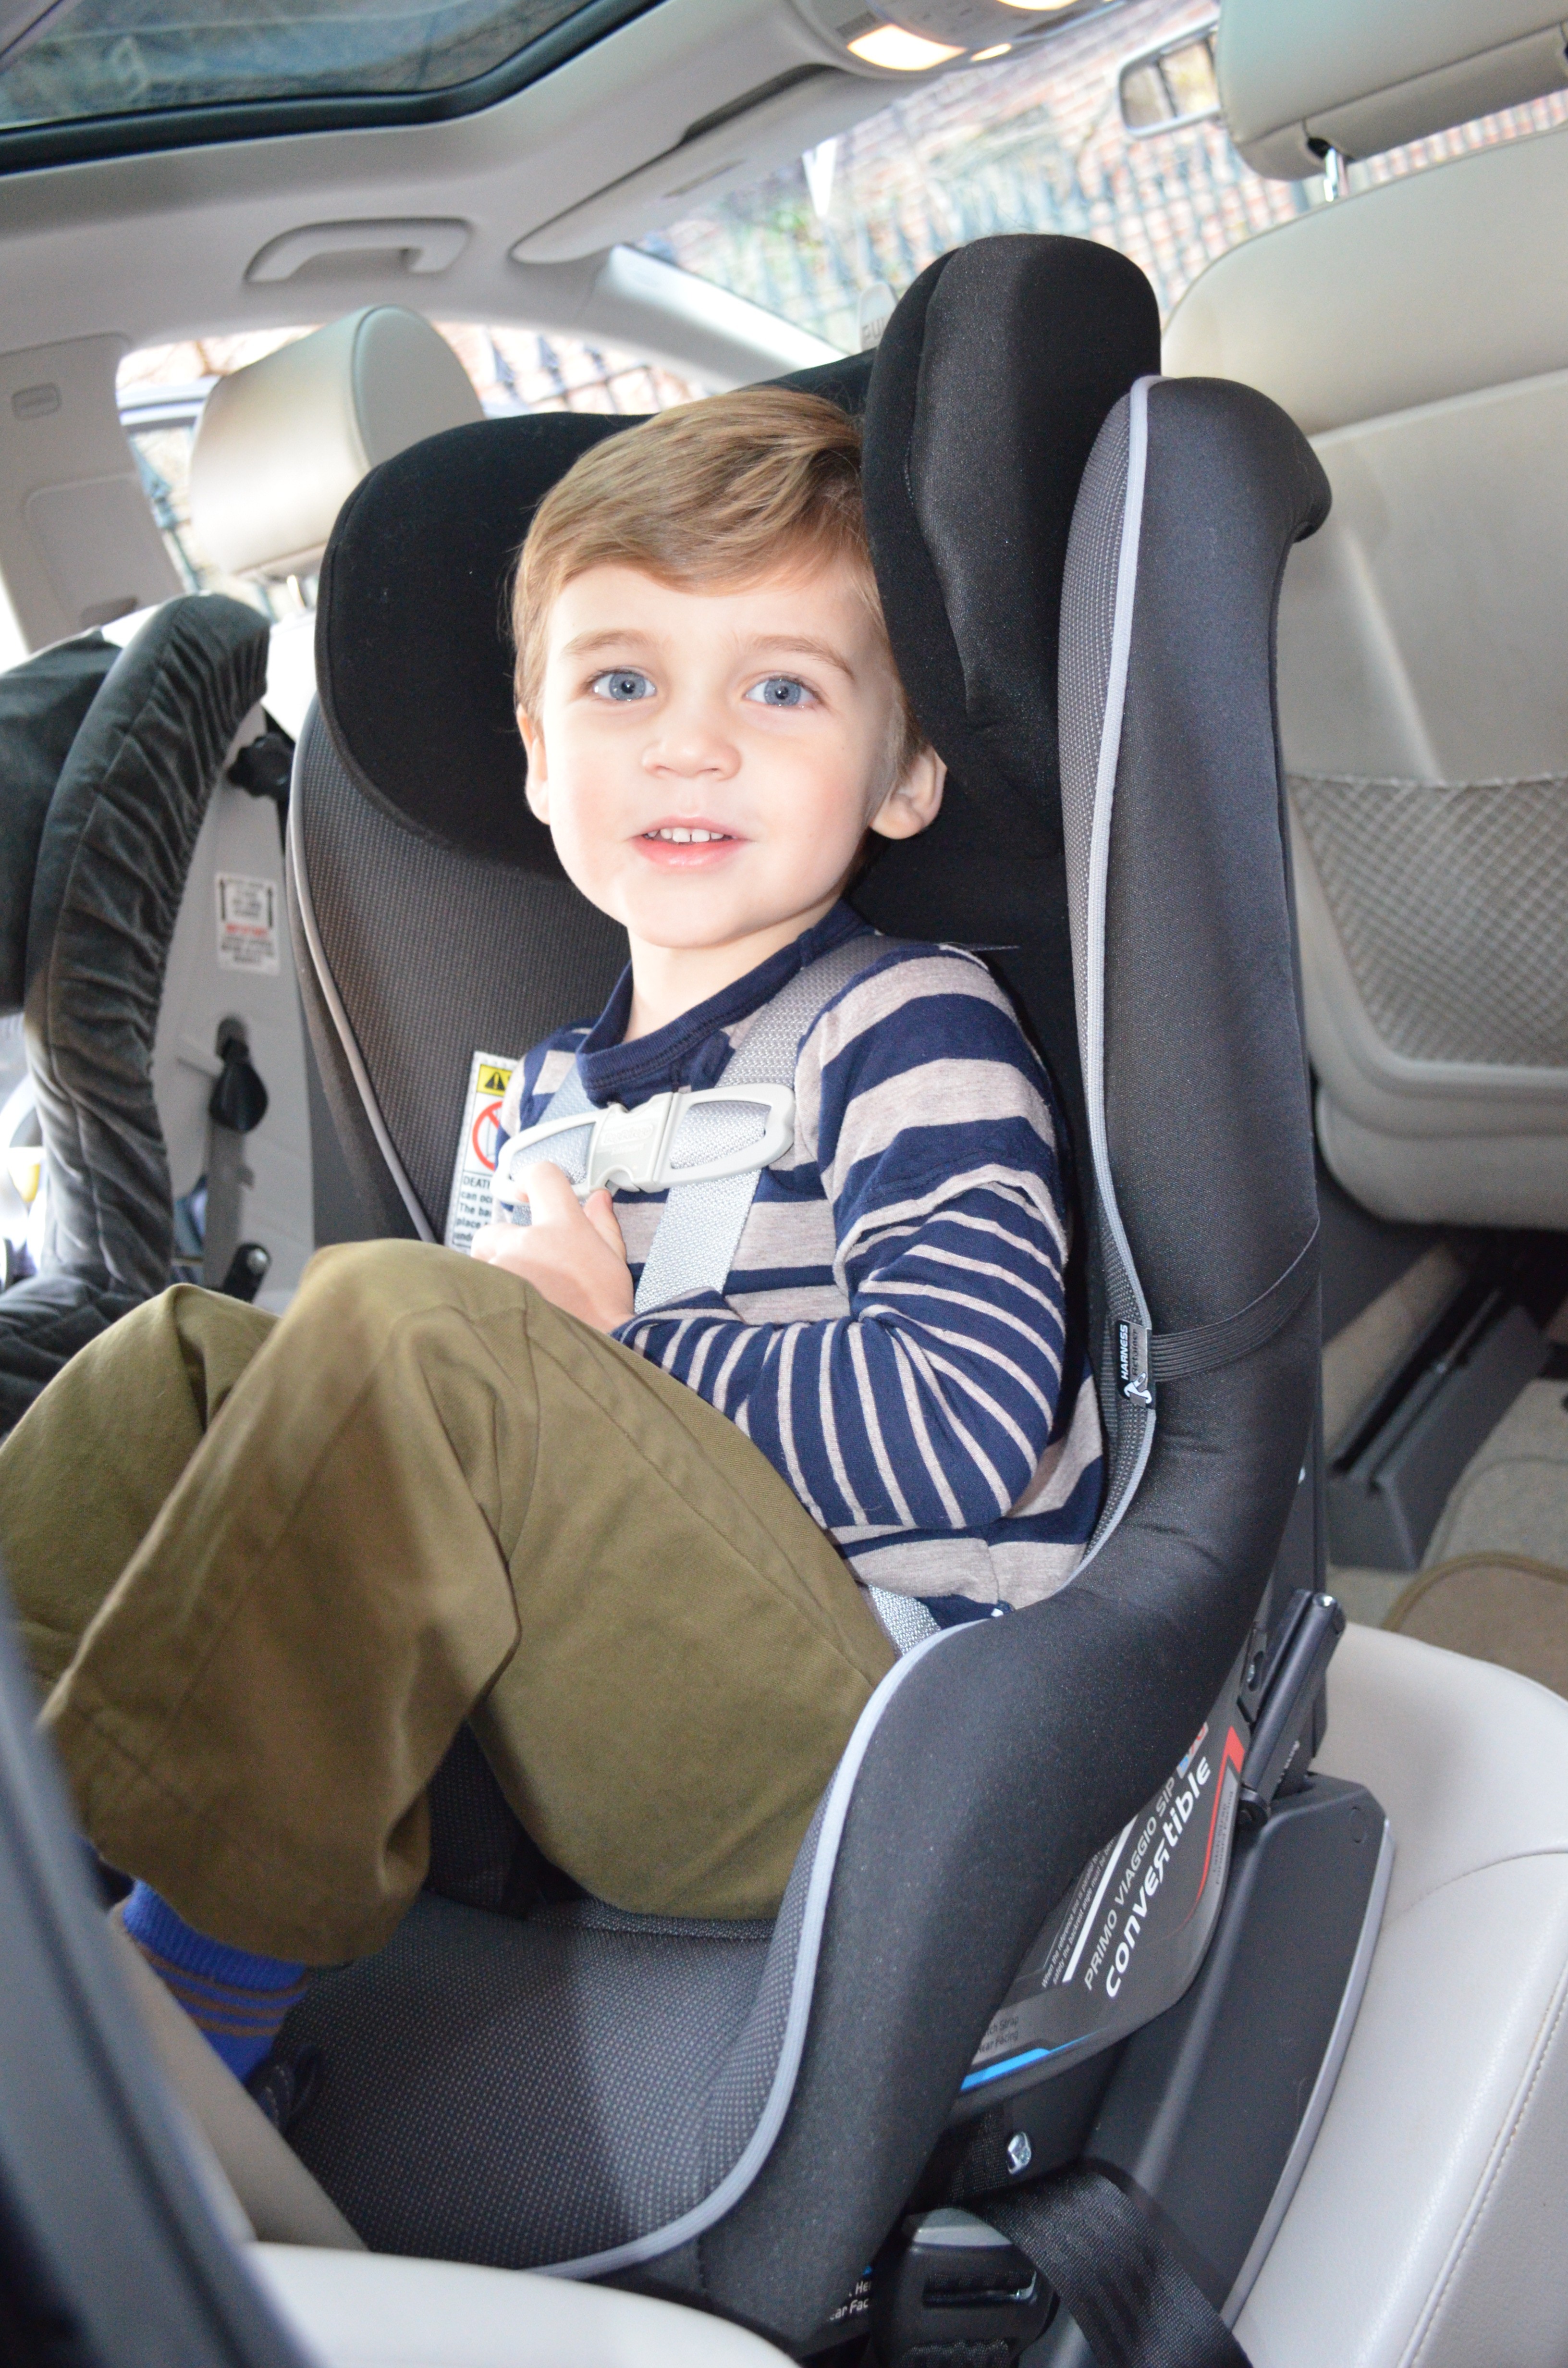 Child Turn Forward Facing, When Should A Child Face Forward In Car Seat